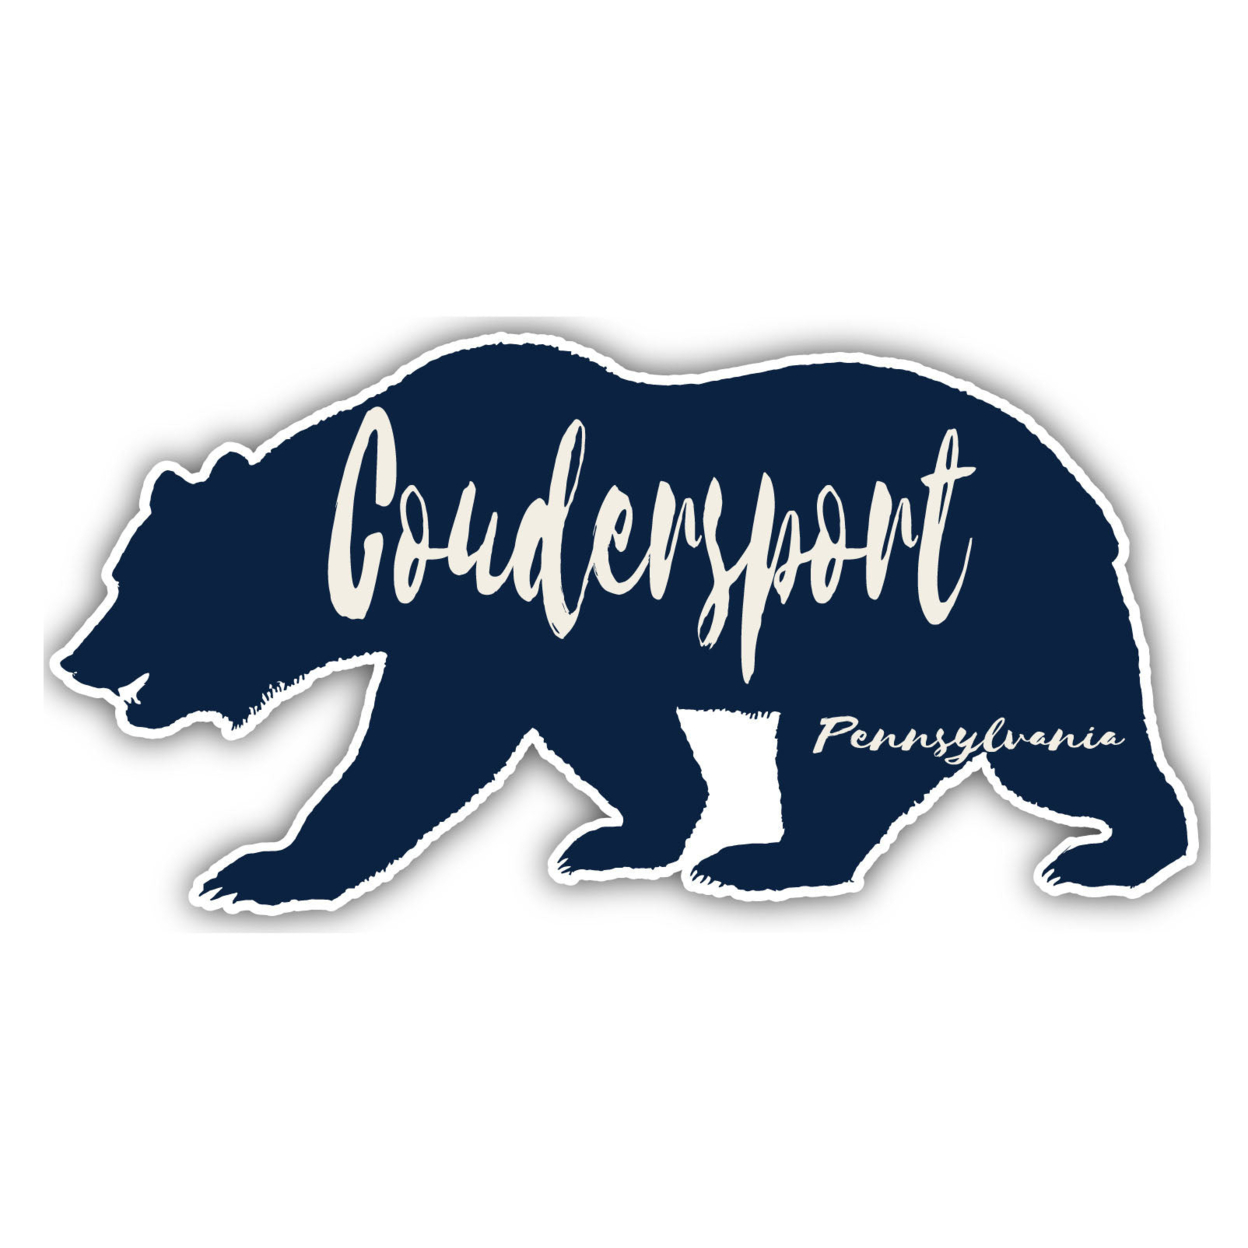 Coudersport Pennsylvania Souvenir Decorative Stickers (Choose Theme And Size) - Single Unit, 8-Inch, Bear